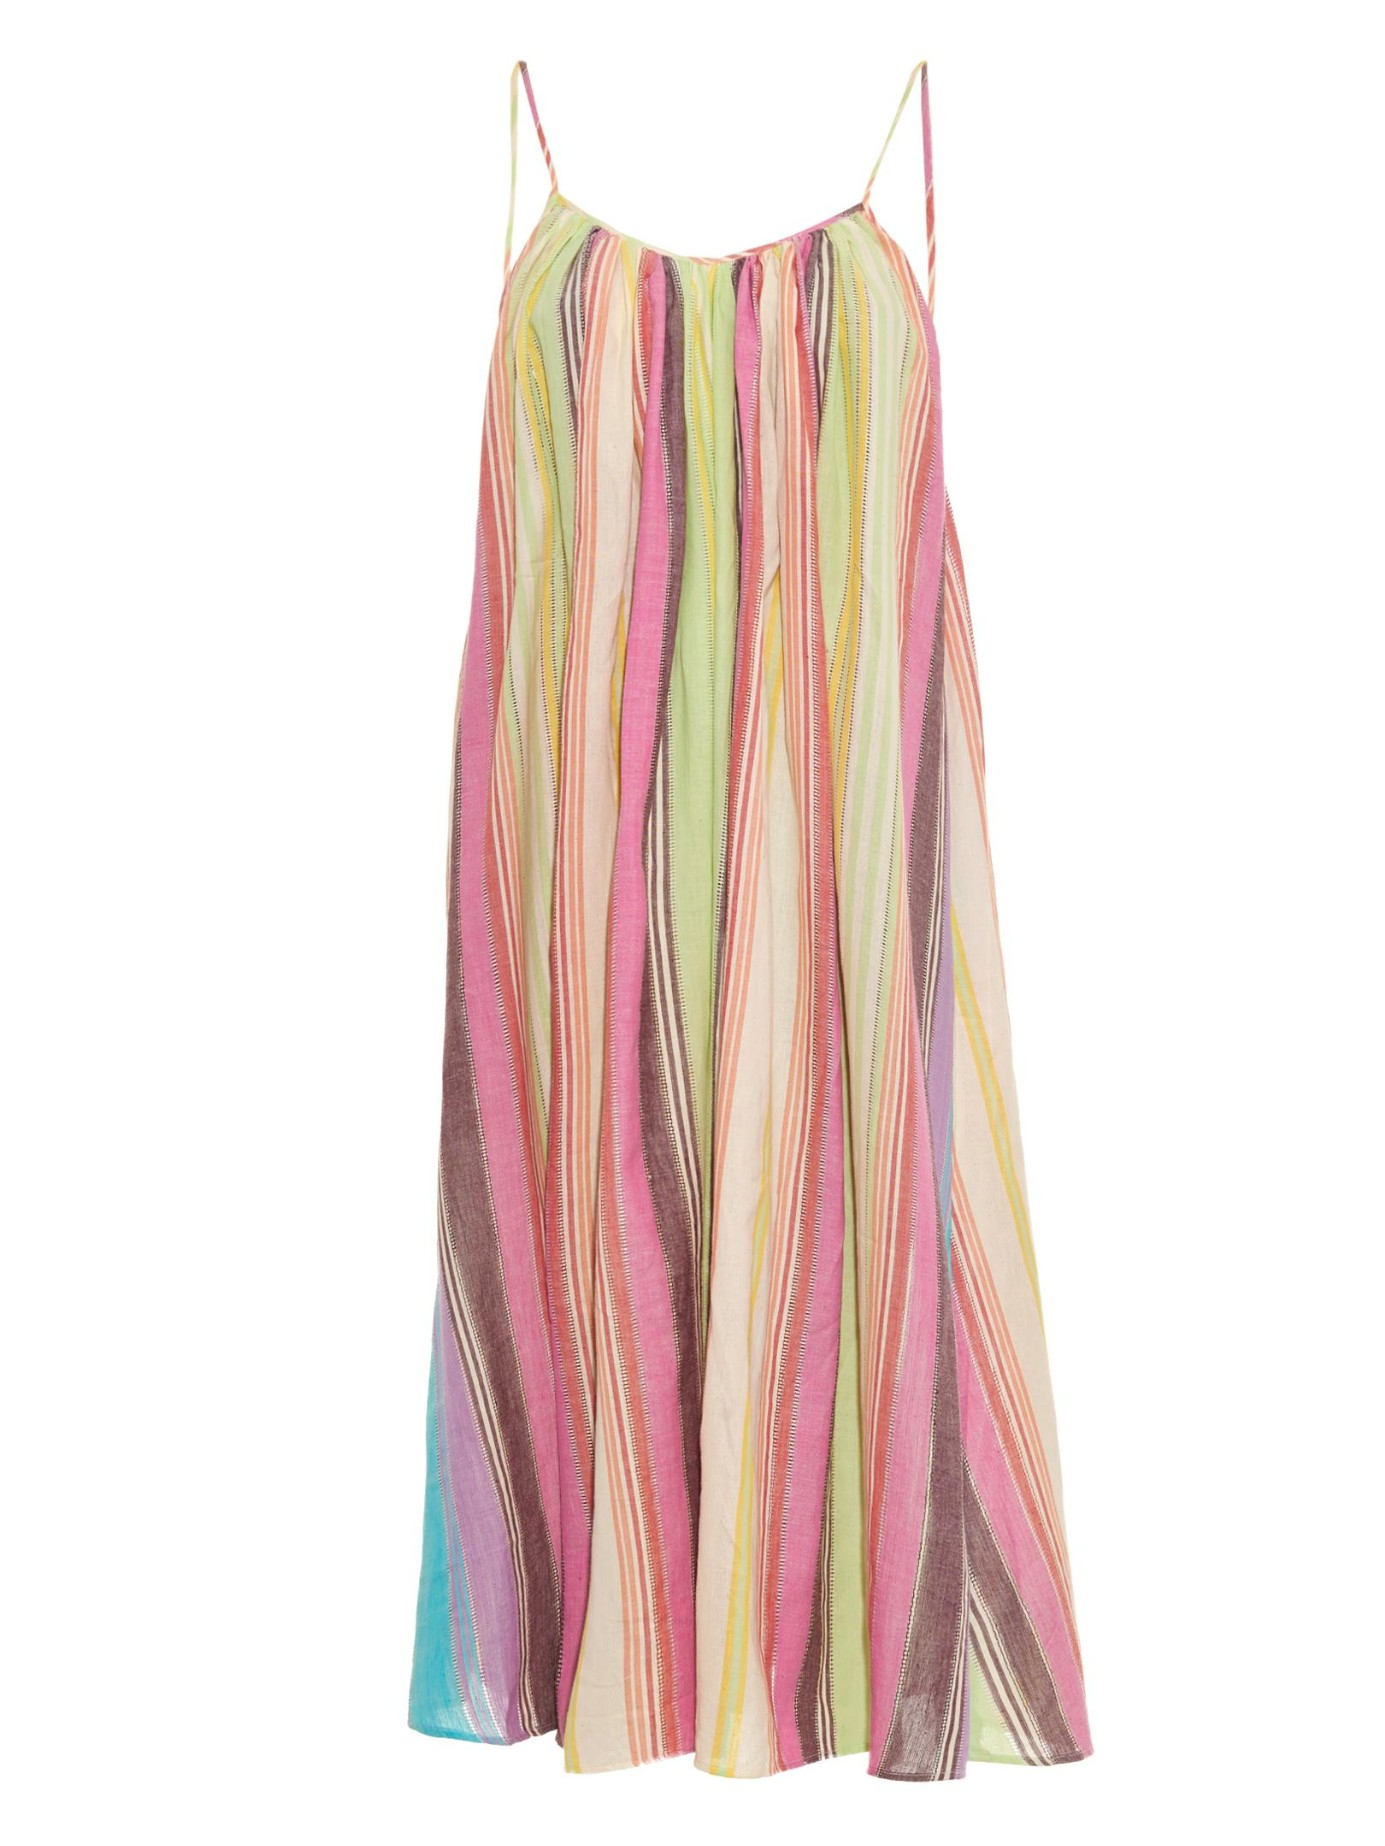 Lyst - Mara Hoffman Rainbow Stripe Cotton Dress in Pink